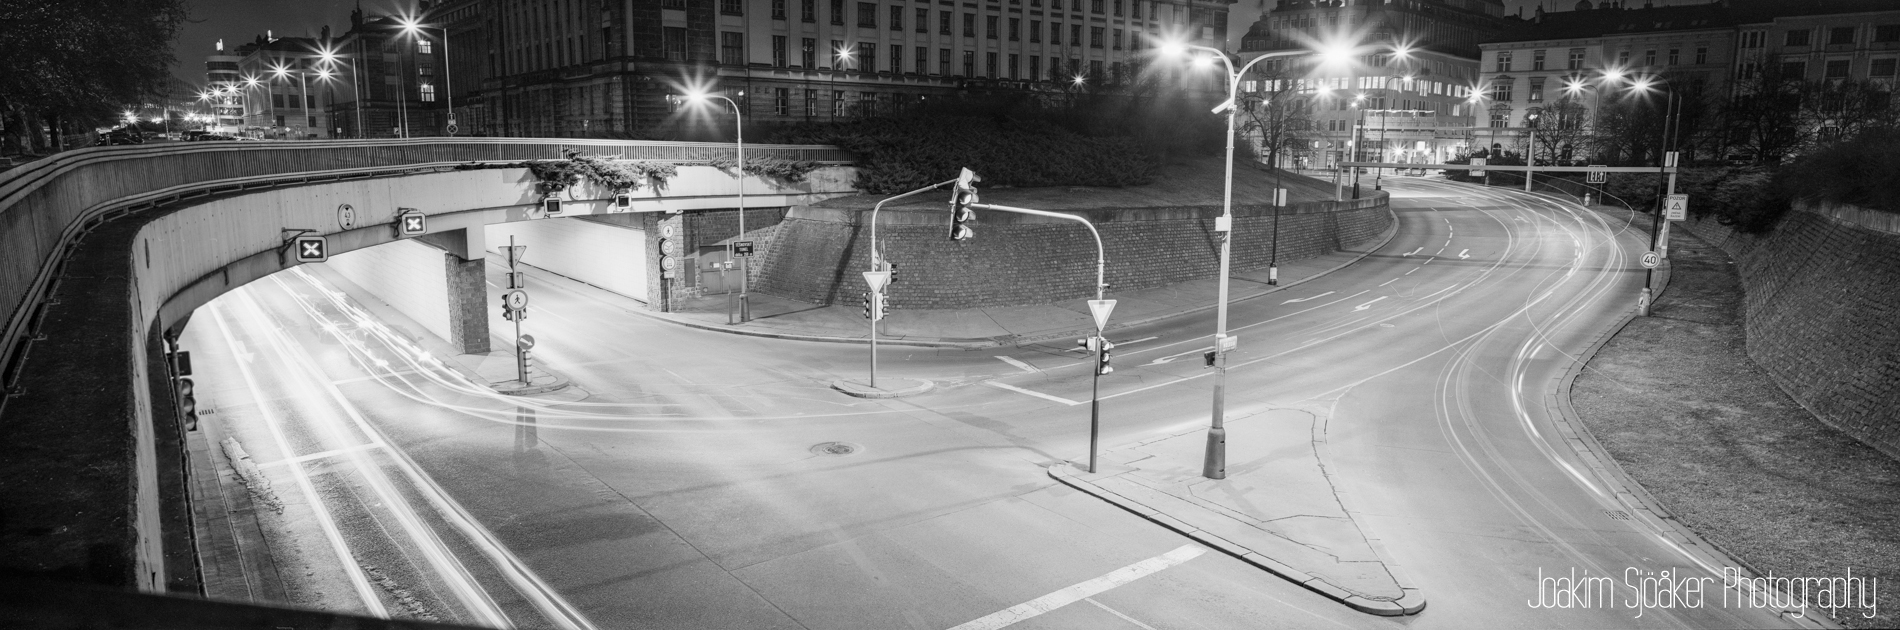 Joakim Sjöåker Photography tesnovsky tunel prague praha panorama 6x17 acros caffenol